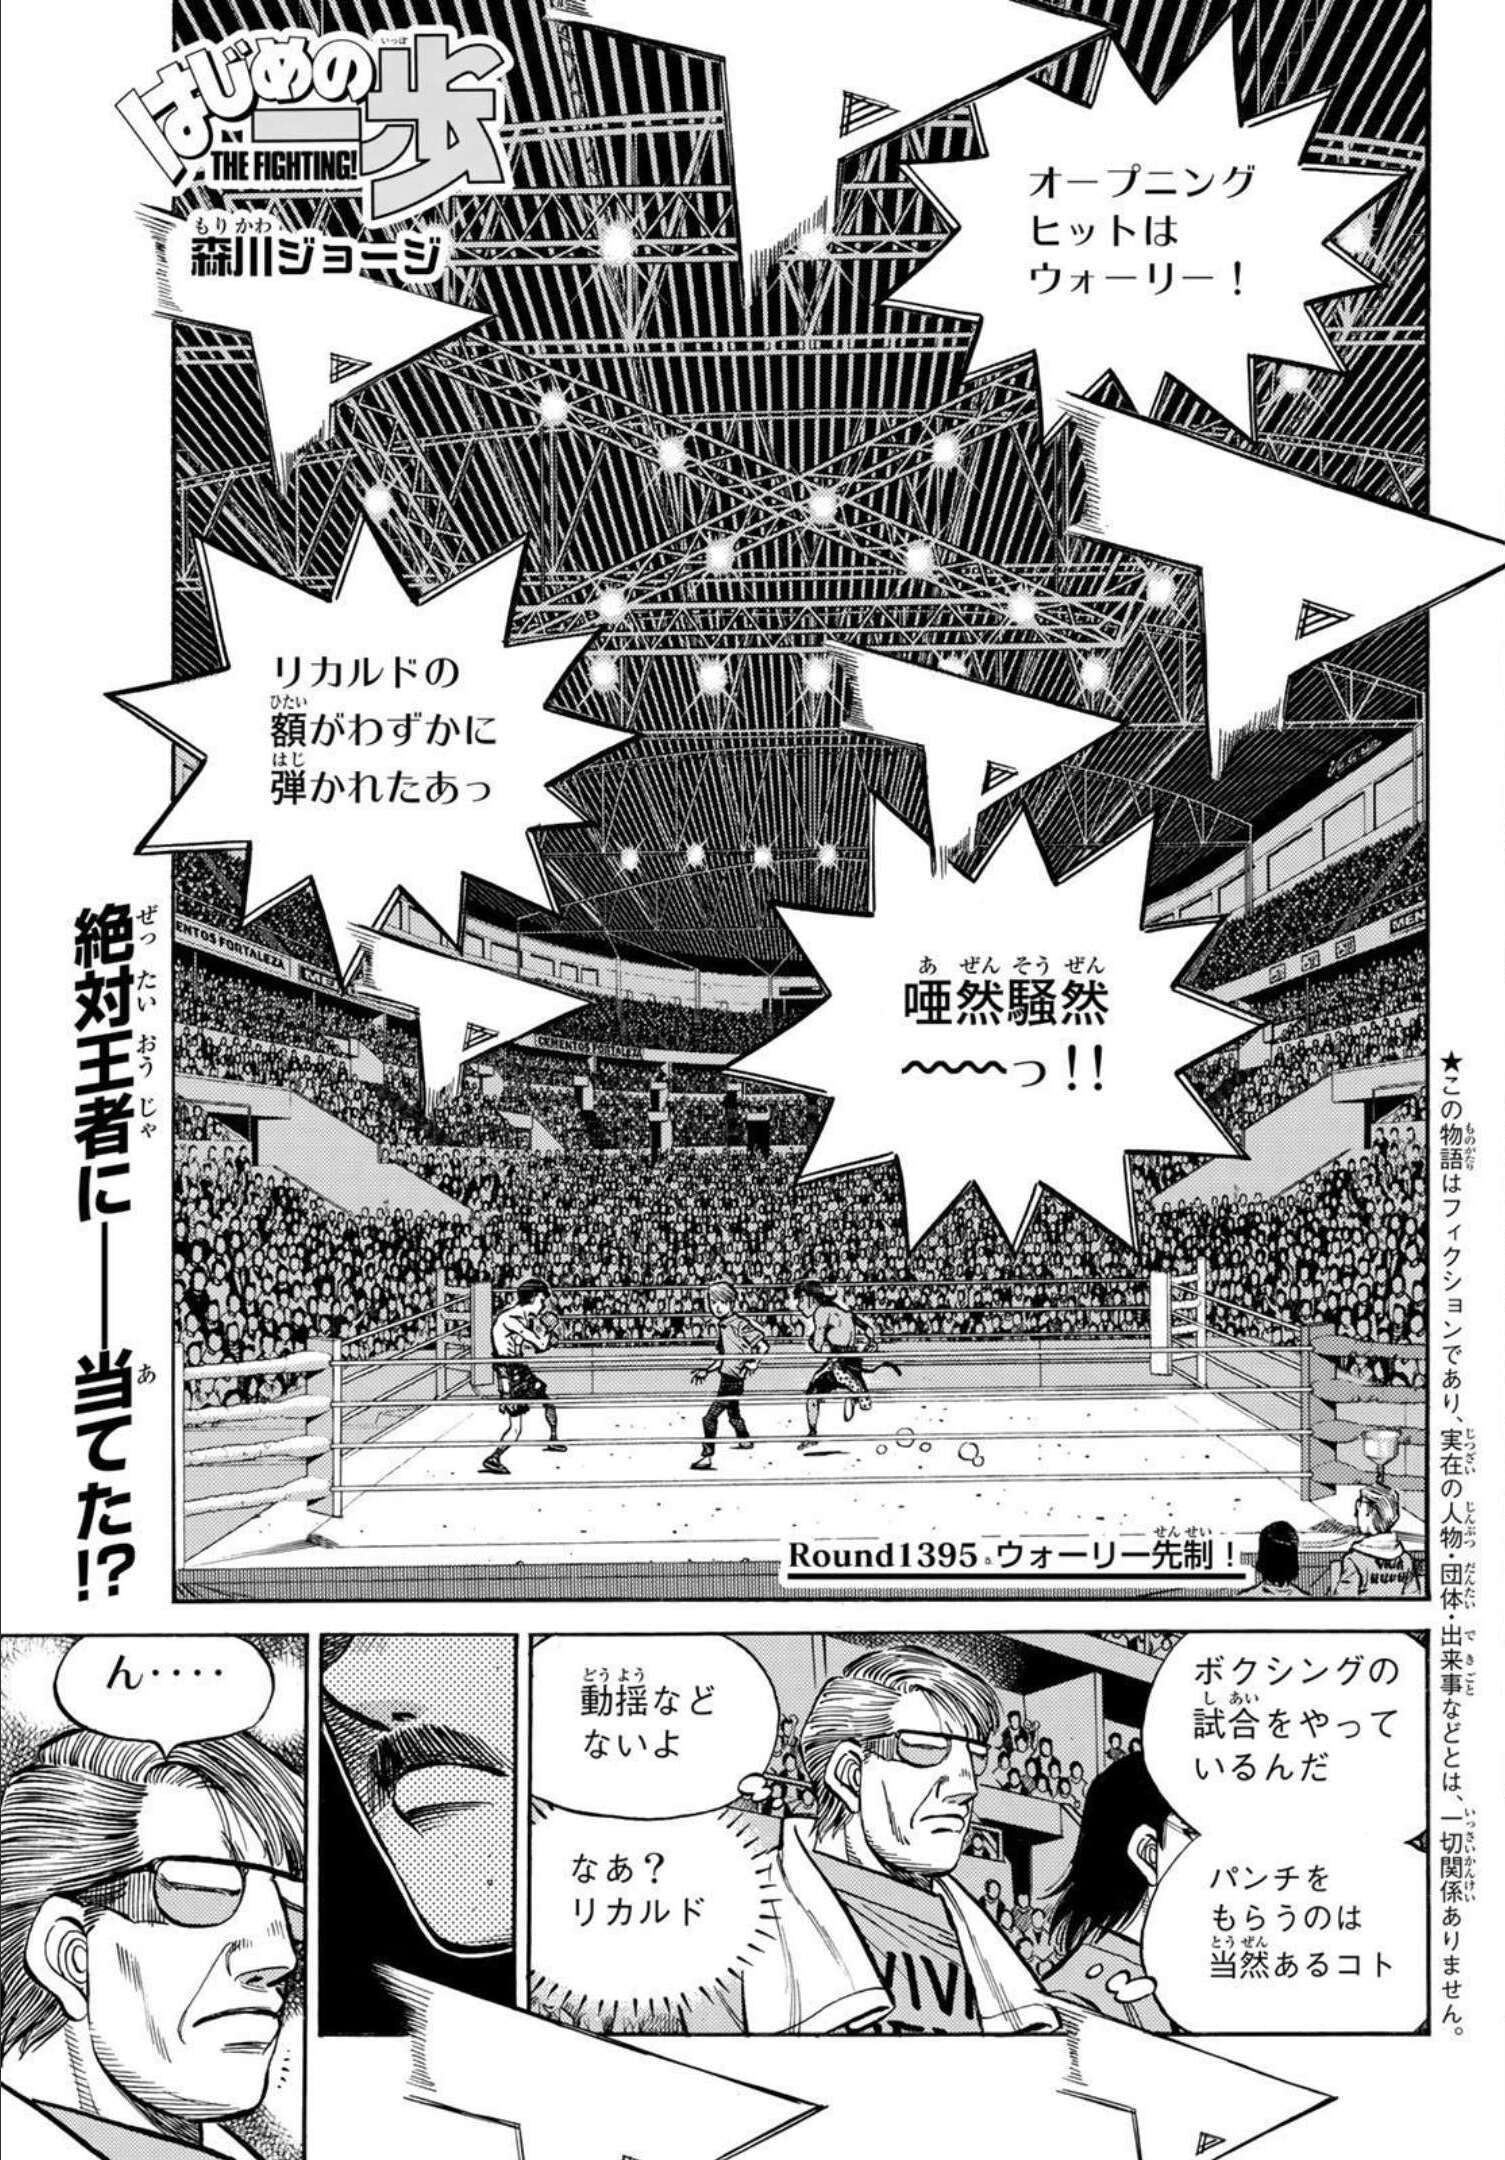 Hajime no Ippo - Chapter 1395 - Page 1